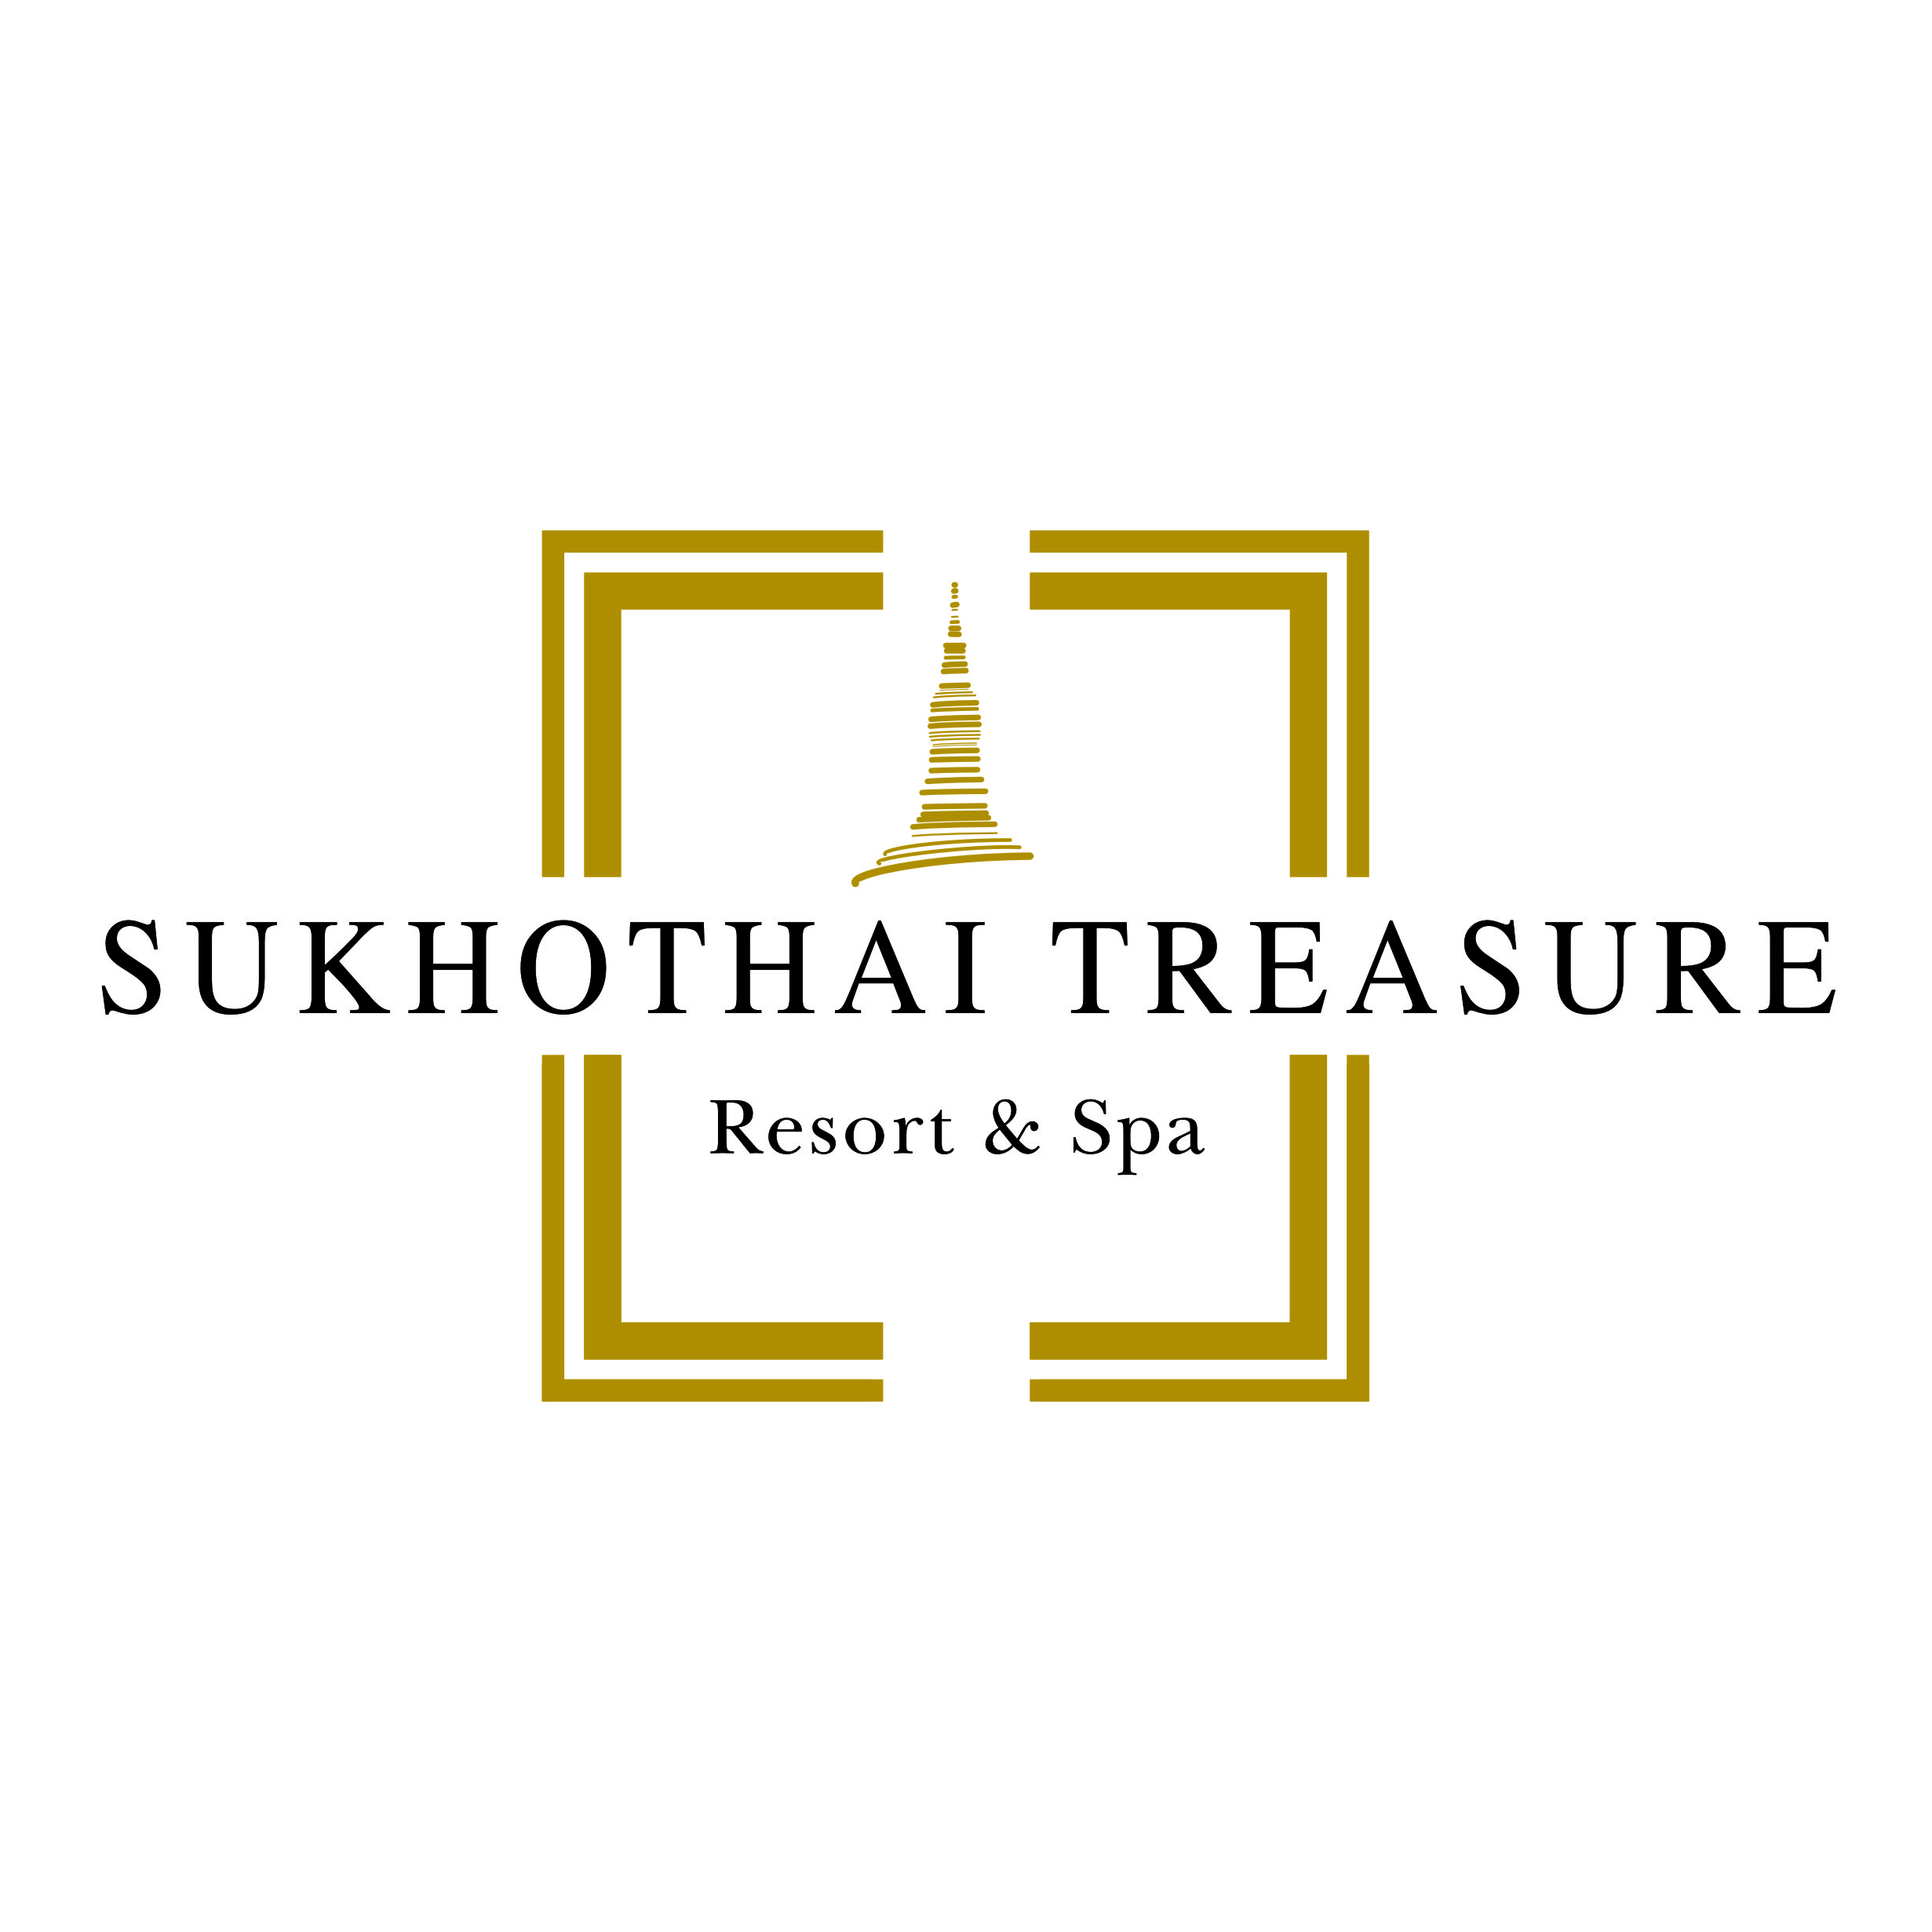 SUKHOTHAI TREASURE RESORT & SPA